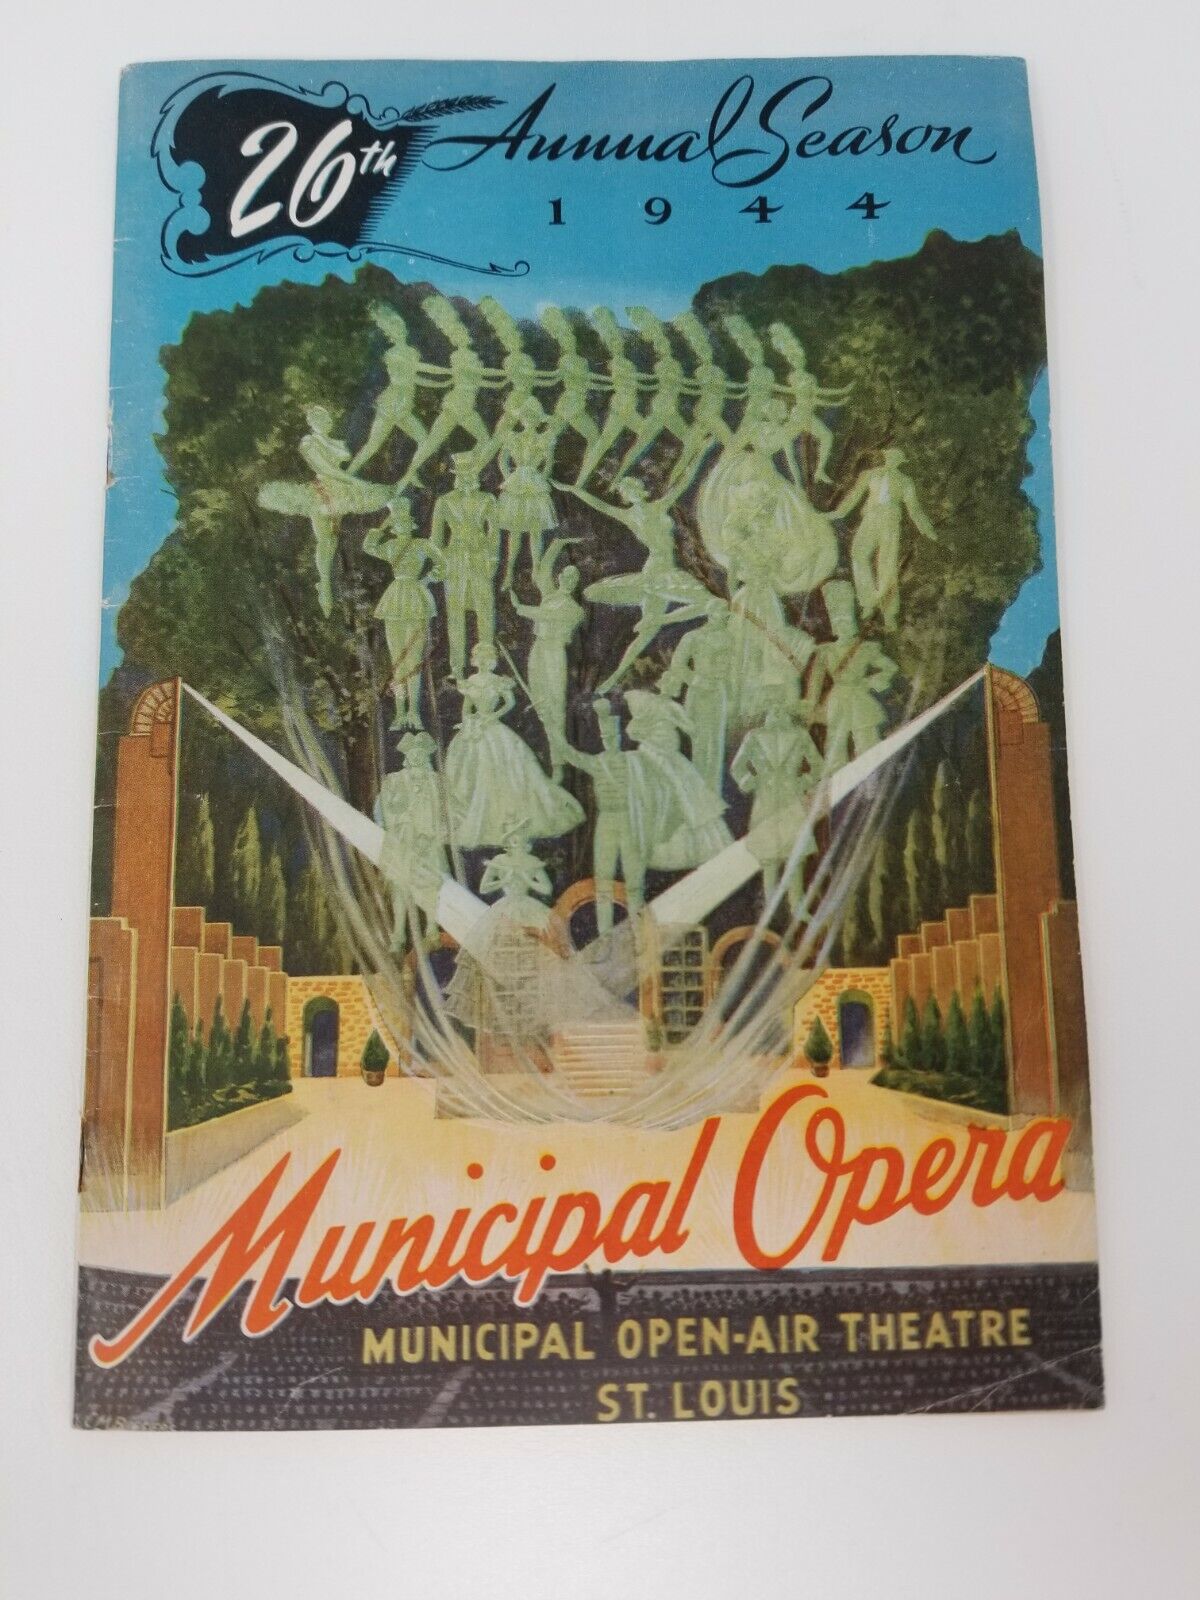 Vintage 1944 St. Louis Muny Municipal Opera Forest Park 26th Annual Season Progr